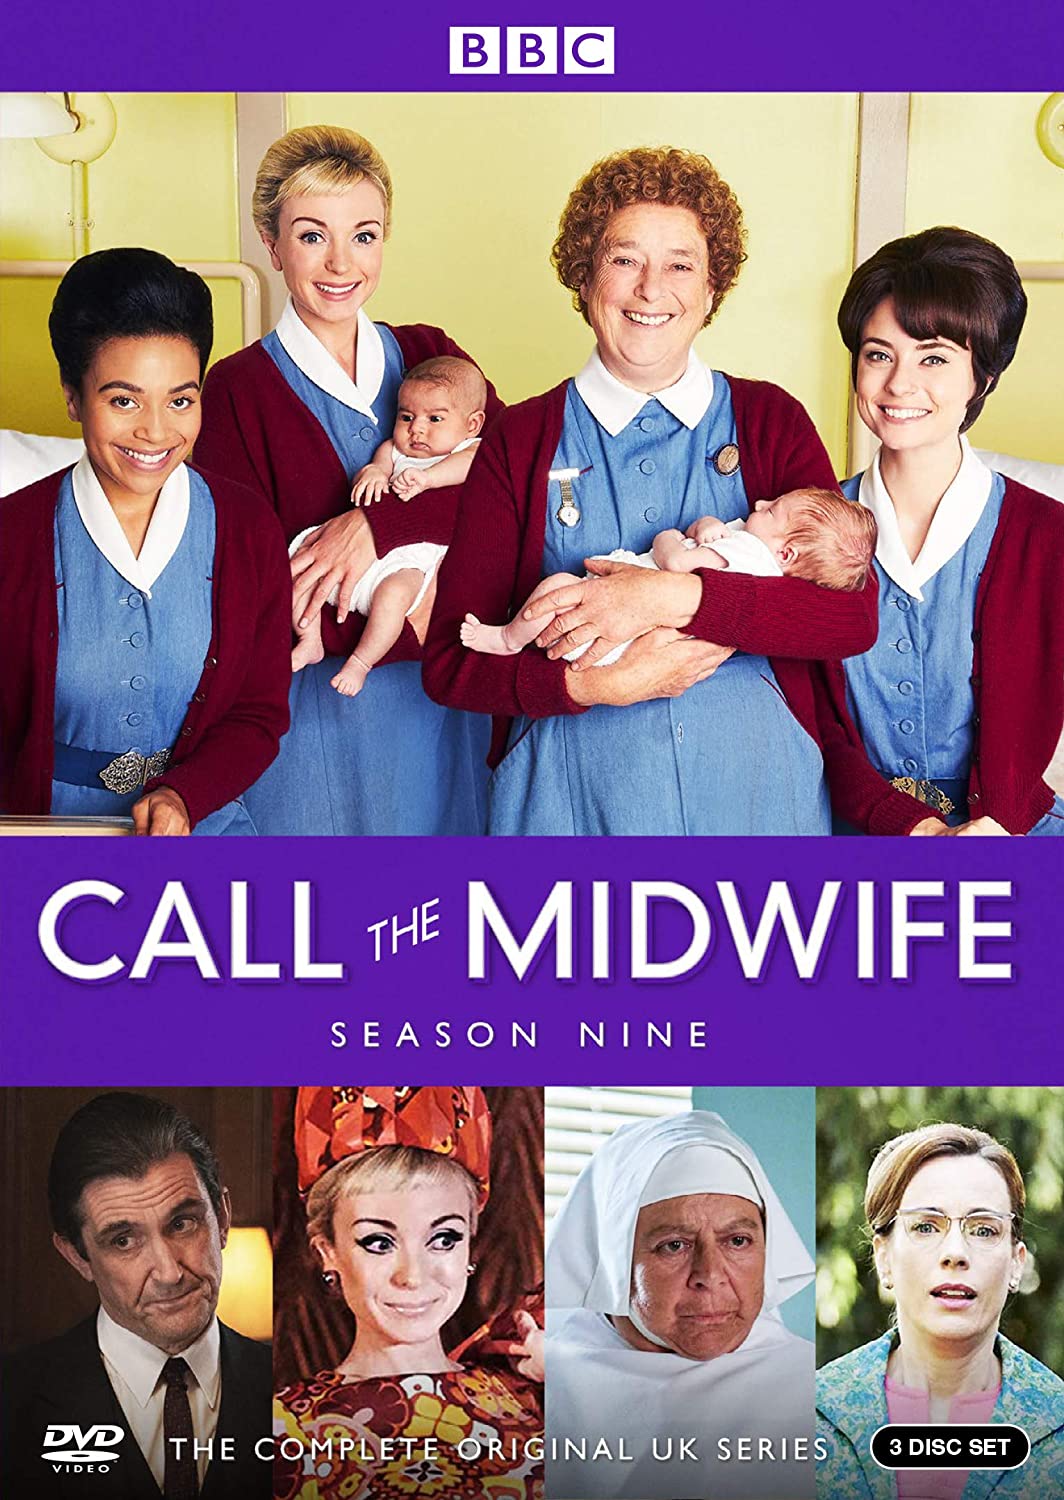 Call the Midwife Season 9 DVD BBC America DVDs & Blu-ray Discs